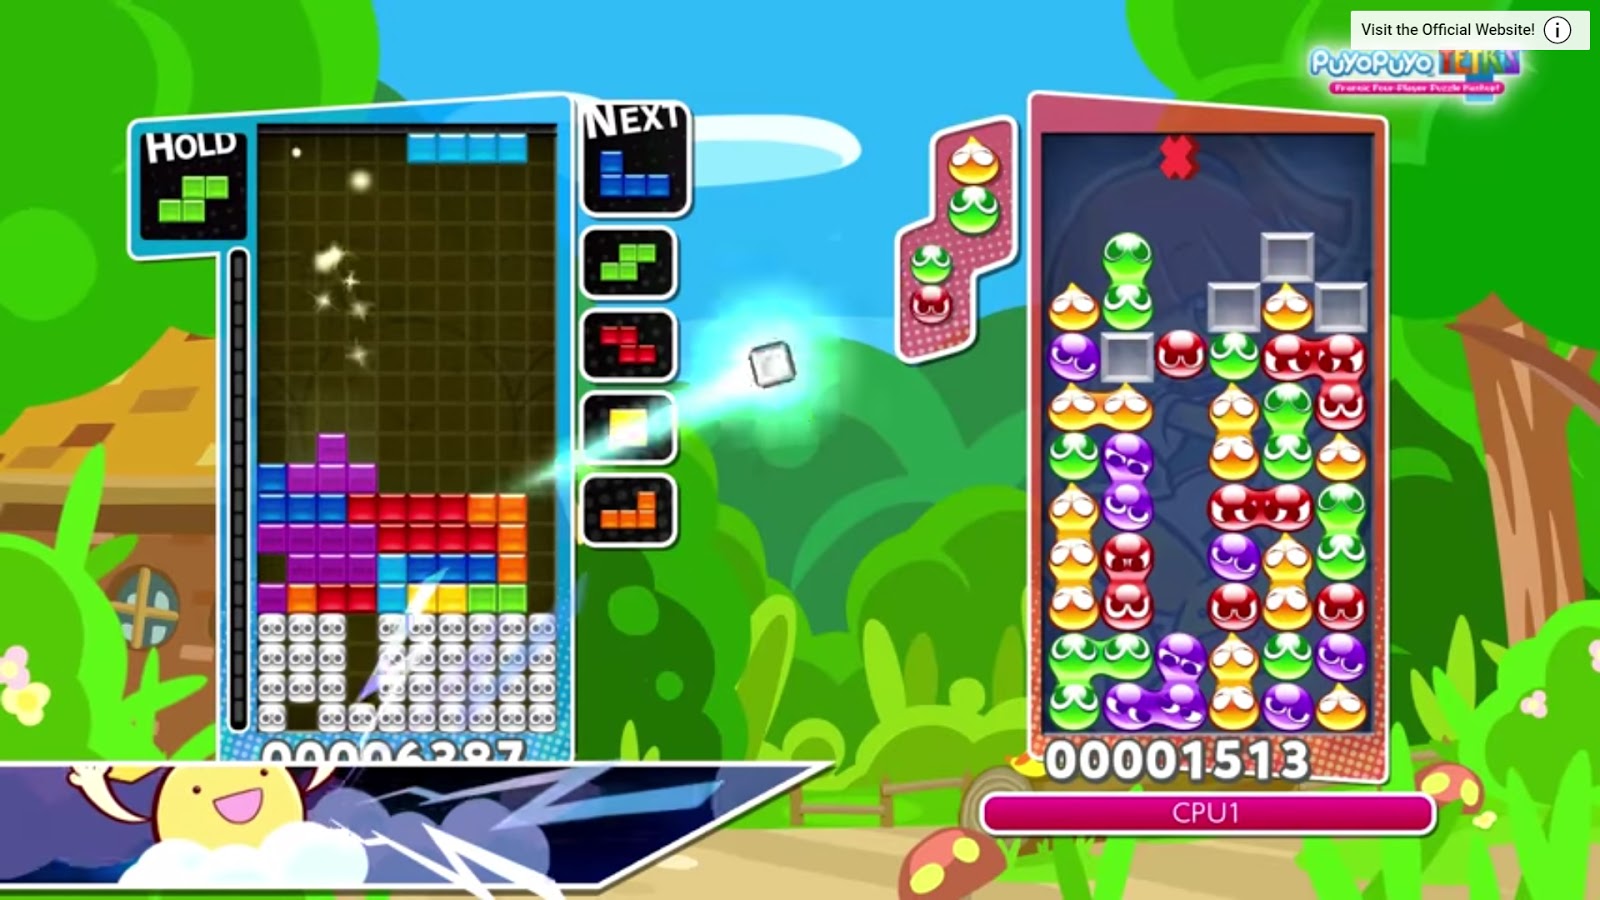 Puyo Puyo Tetris - Switch